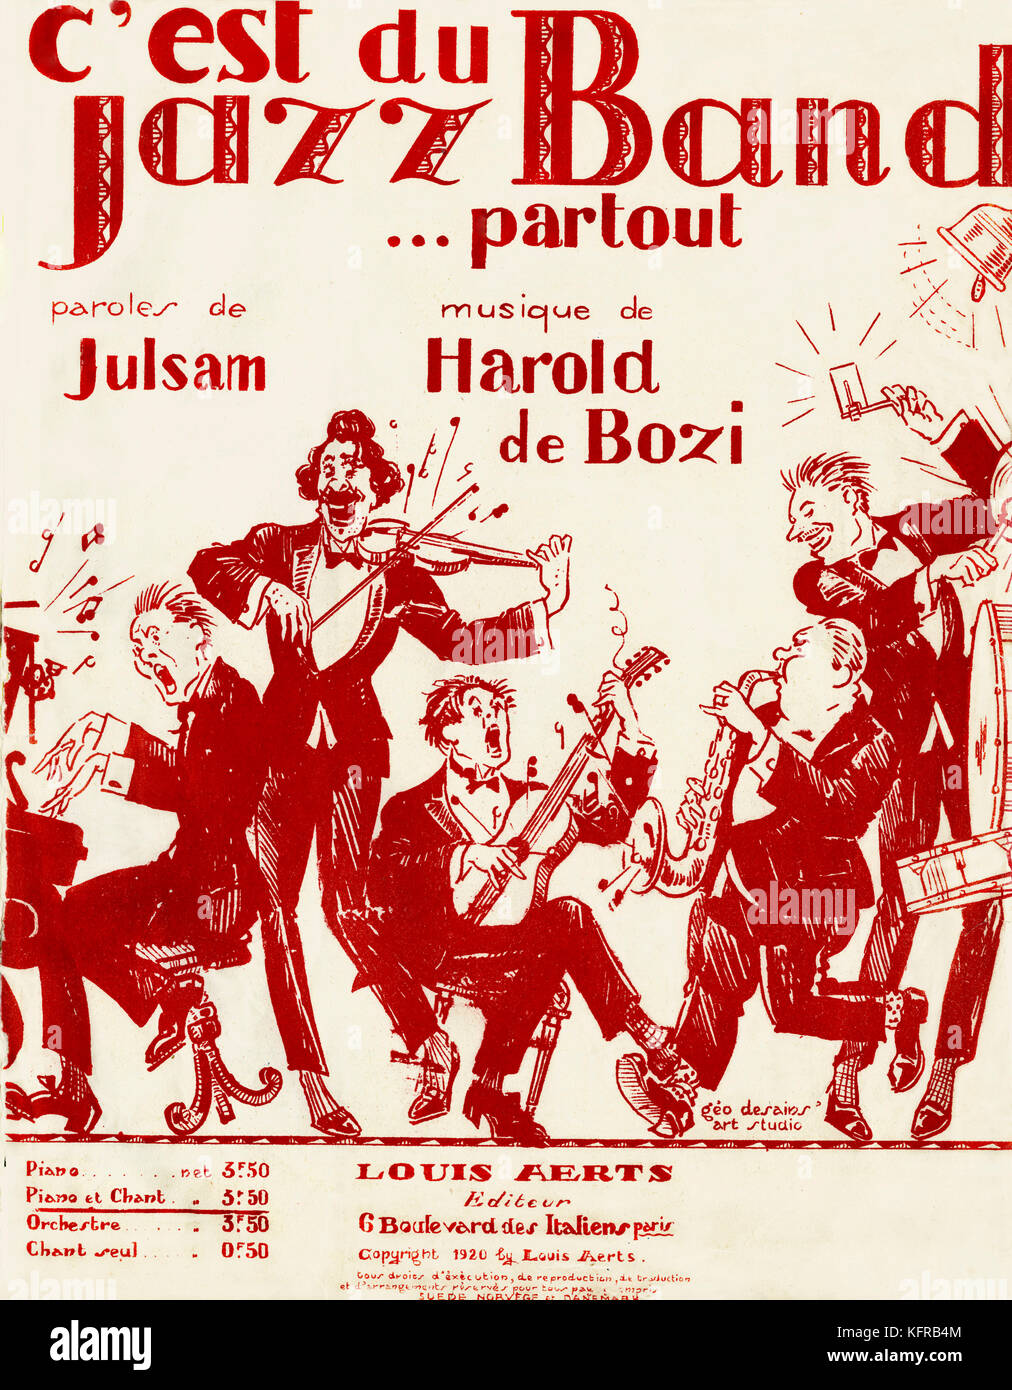 Jazz Band…partout! - score cover.  Music by Harold de Bozi, lyrics by Julsam. Published by Louis Aerts, Paris, 1920. Designed by Geo Desains art studio. Stock Photo